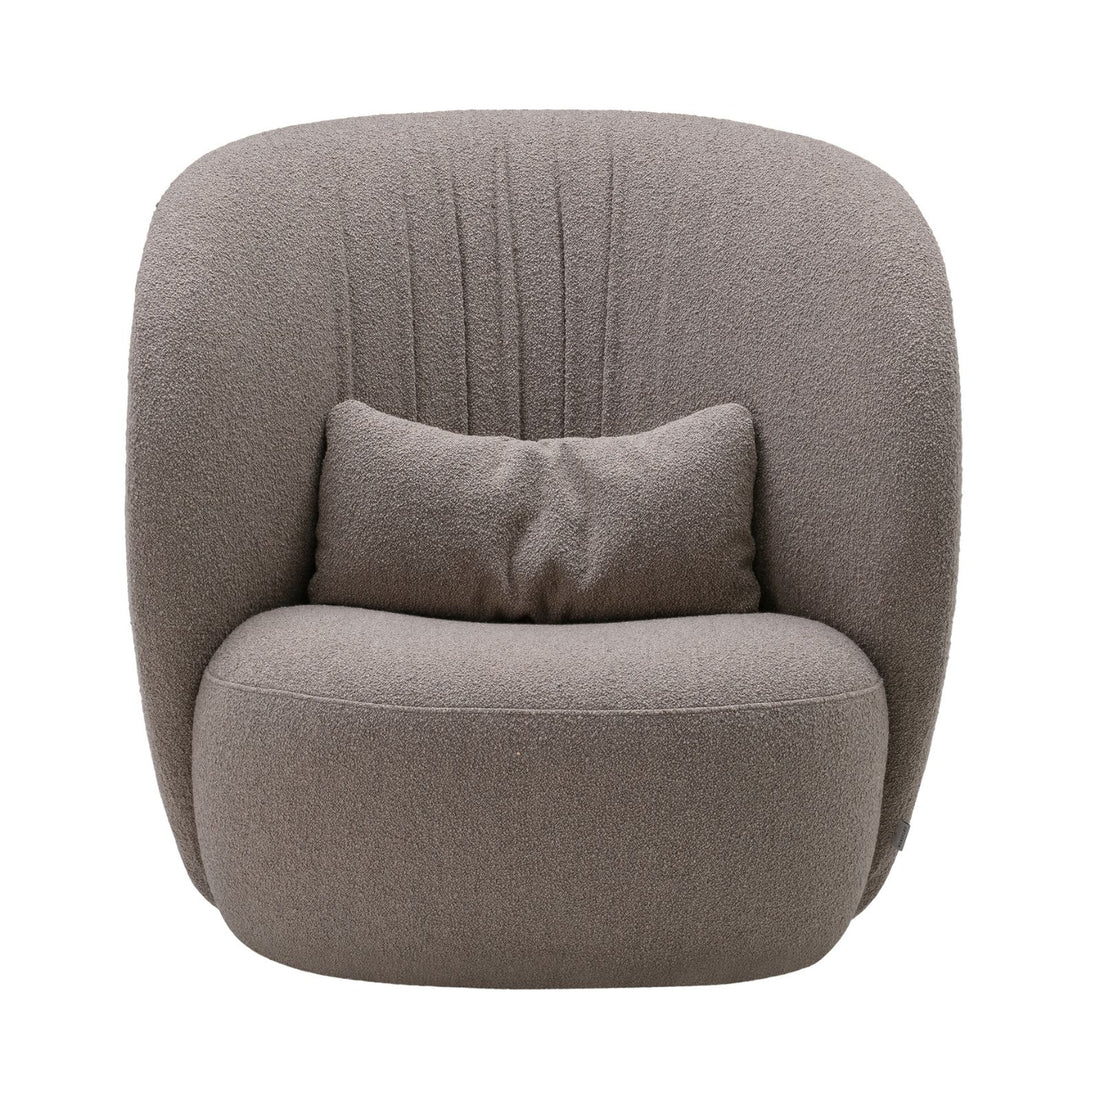 Ovata | Lounge chair